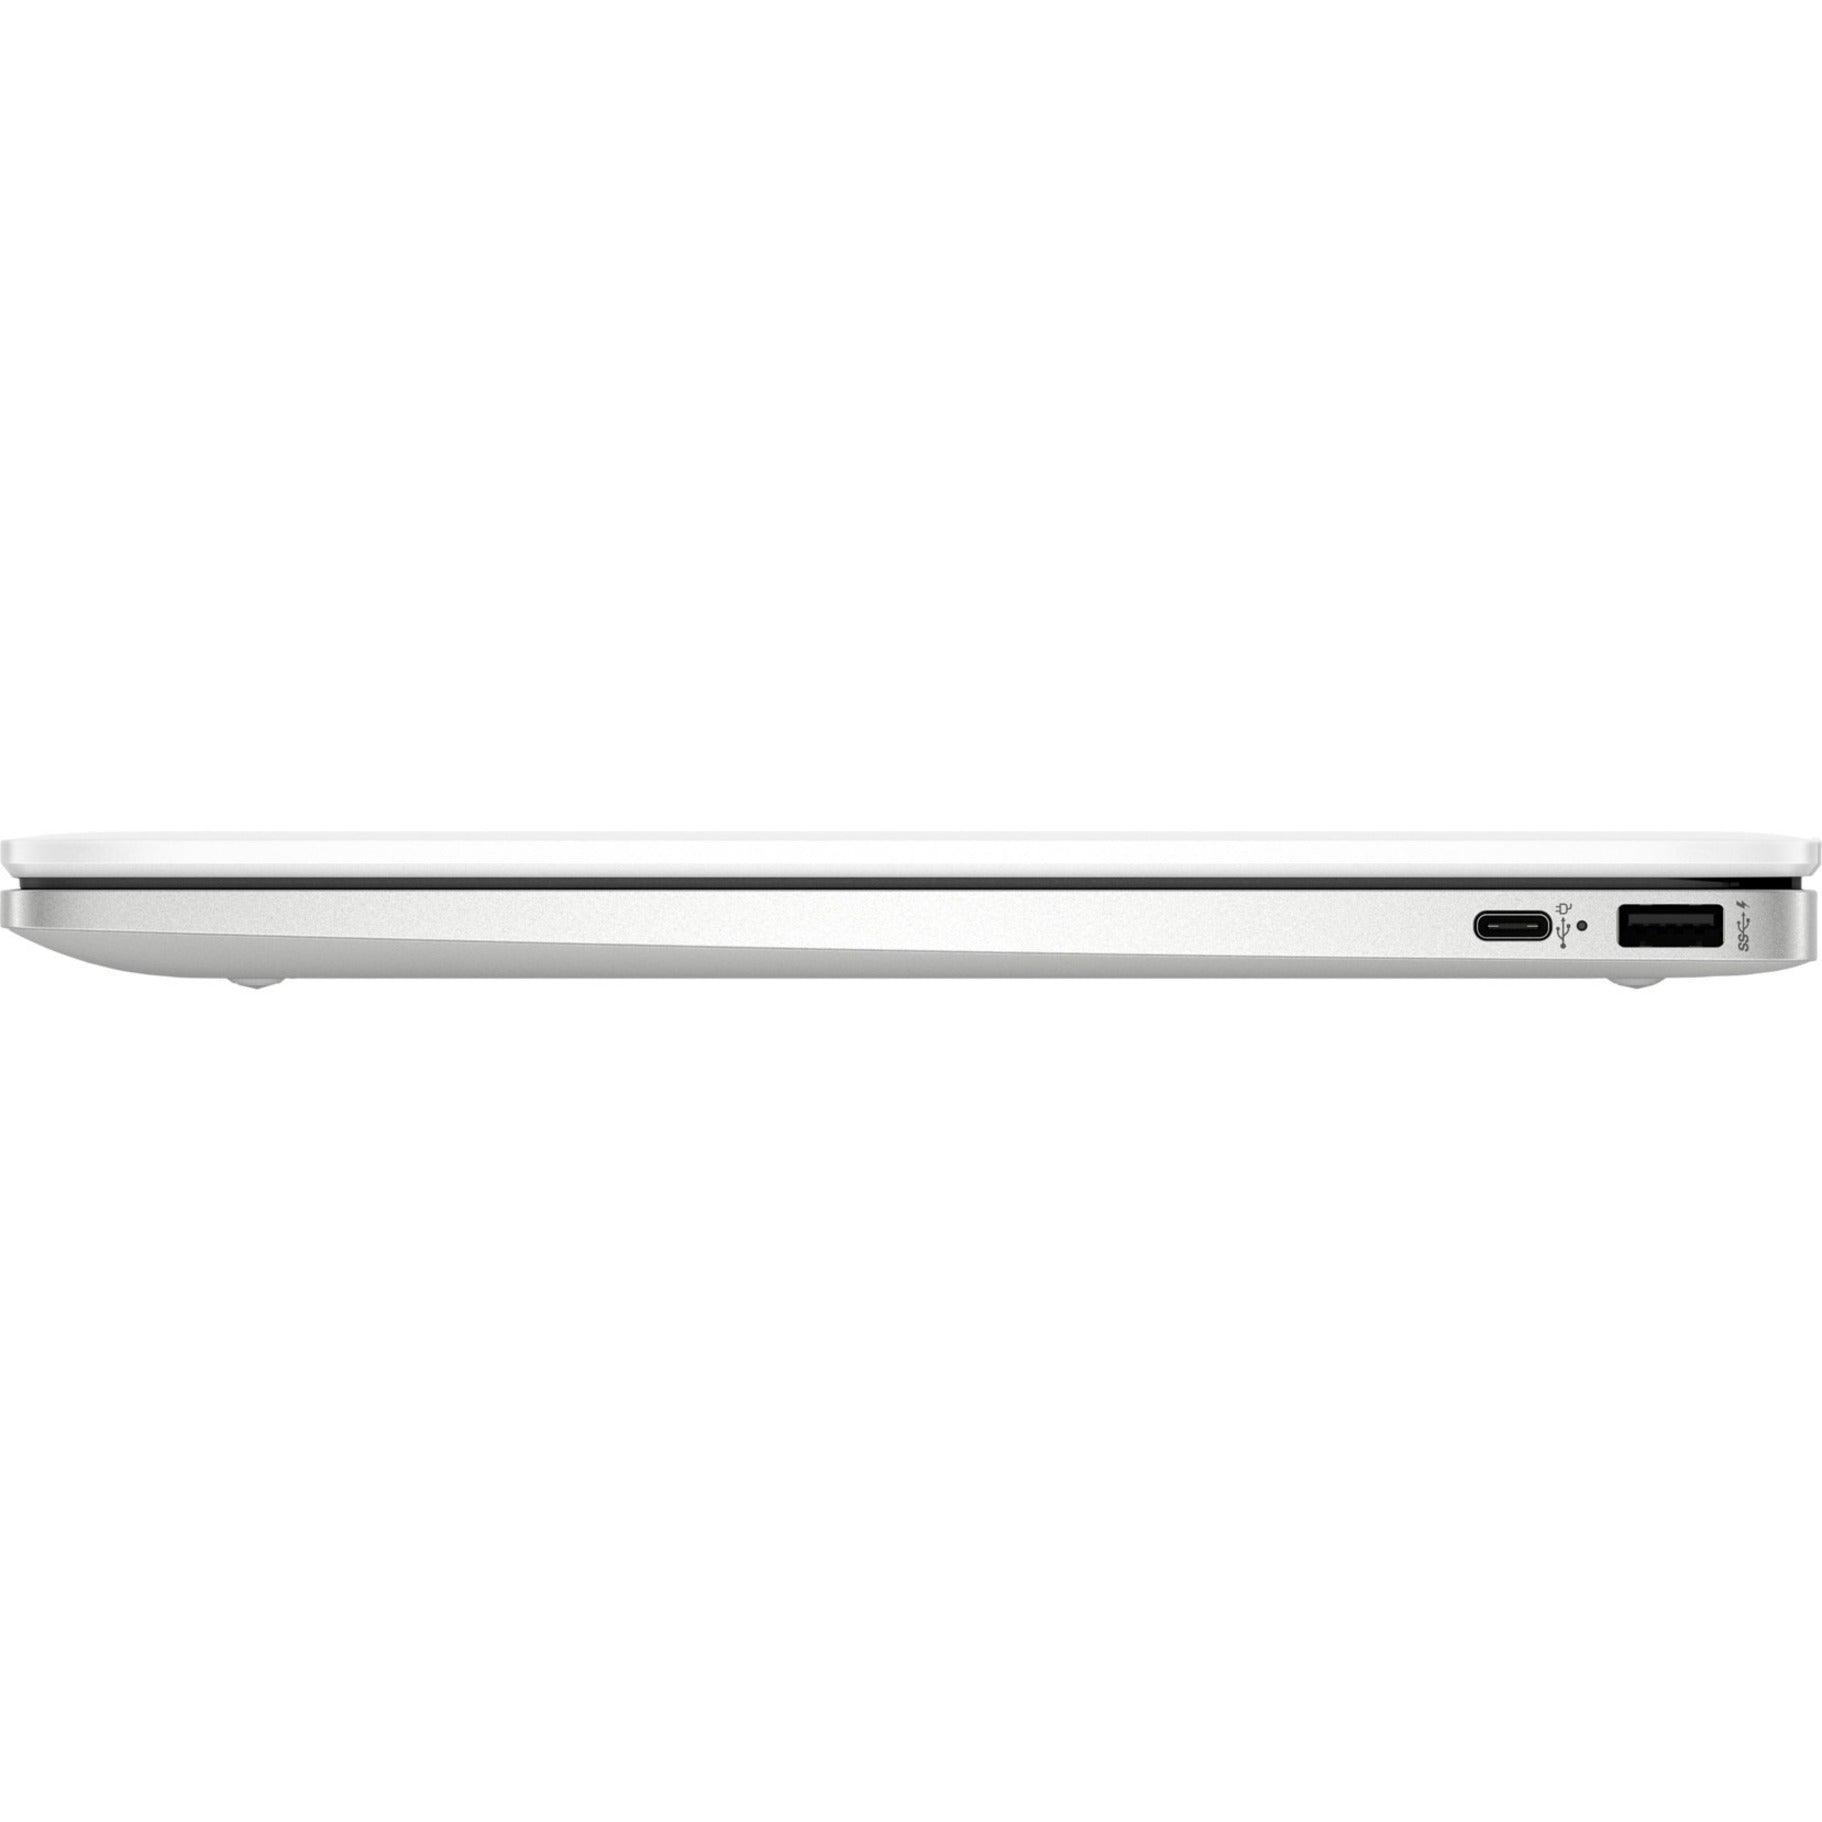 HP Chromebook 14a-na0210nr 14" Chromebook, HD, Intel Celeron N4120, 4GB RAM, 64GB Flash Memory, Ceramic White, Natural Silver, Refurbished